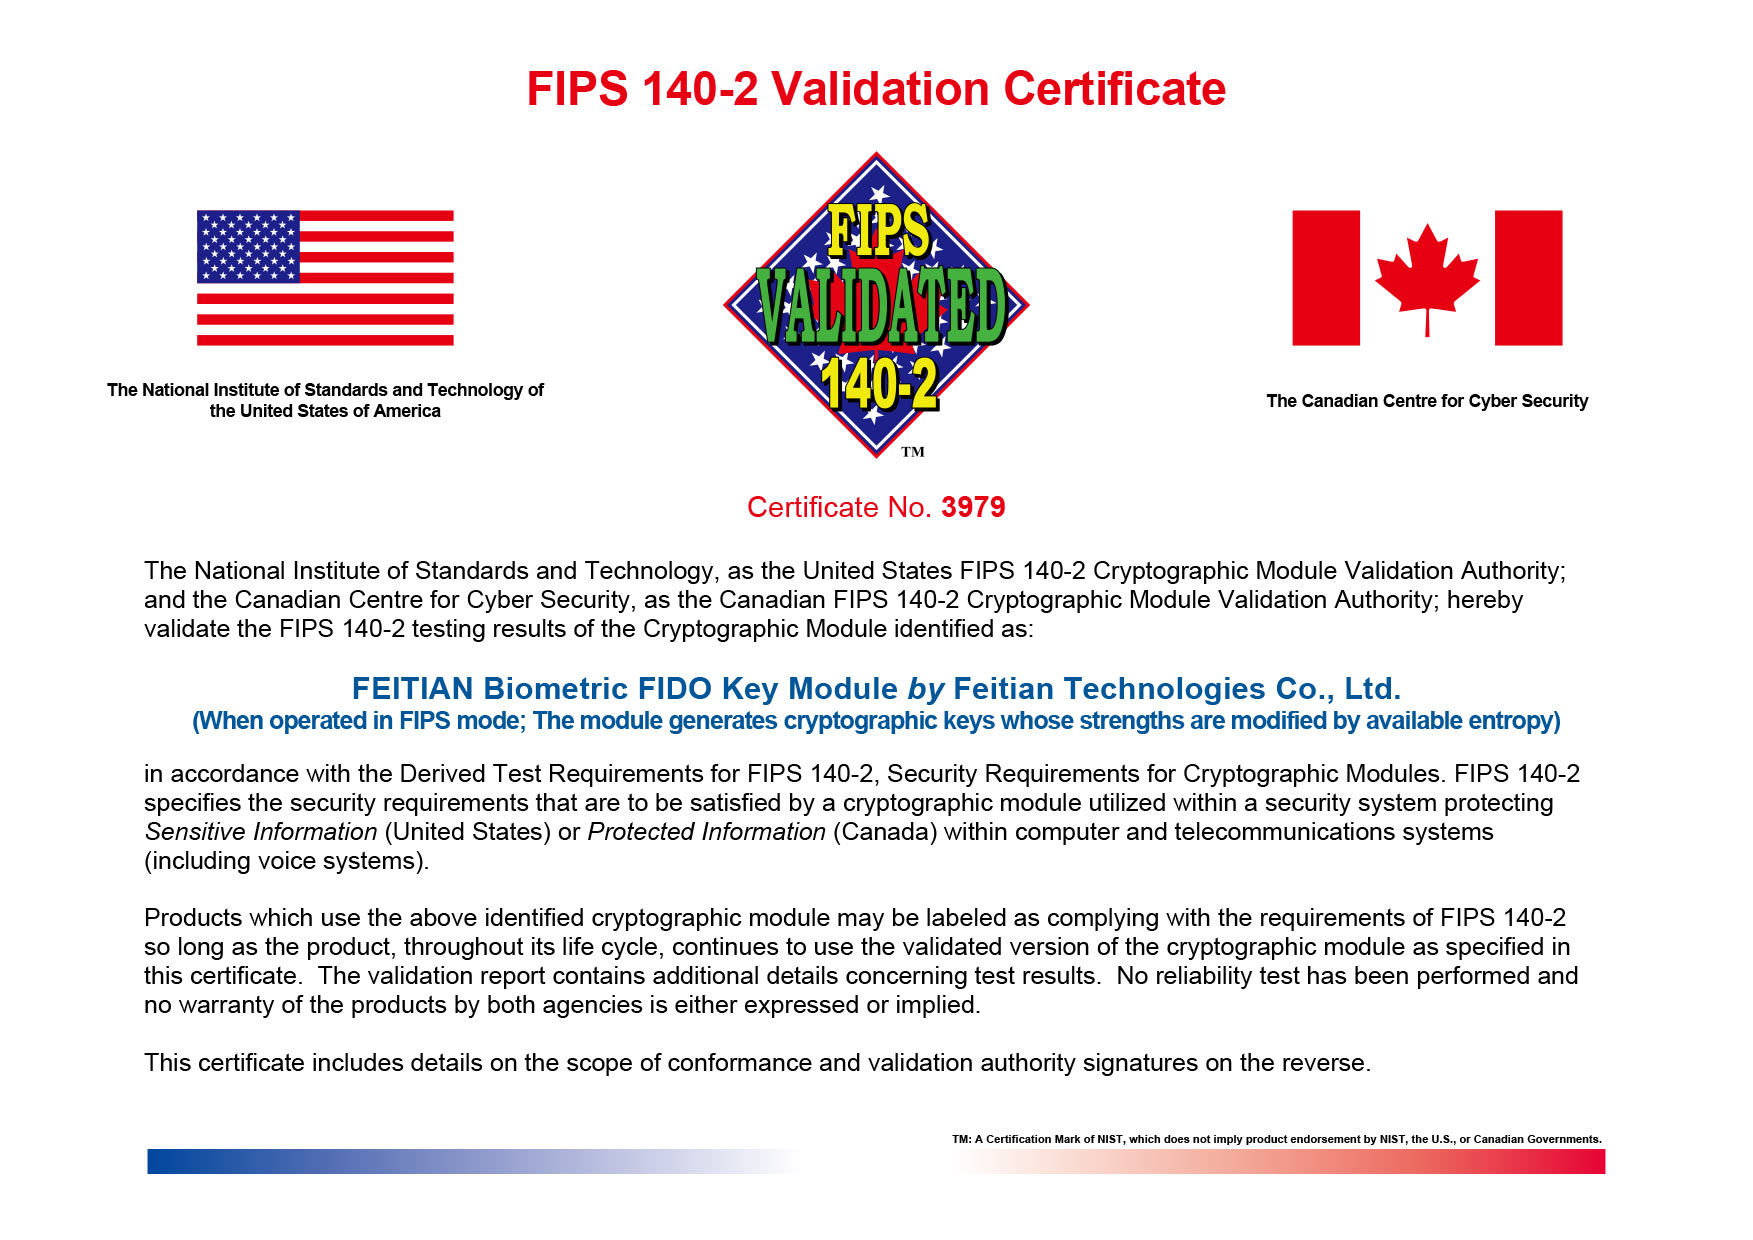 FEITIAN Biometric FIDO Key Module FIPS 140-2 Level 2 Certification